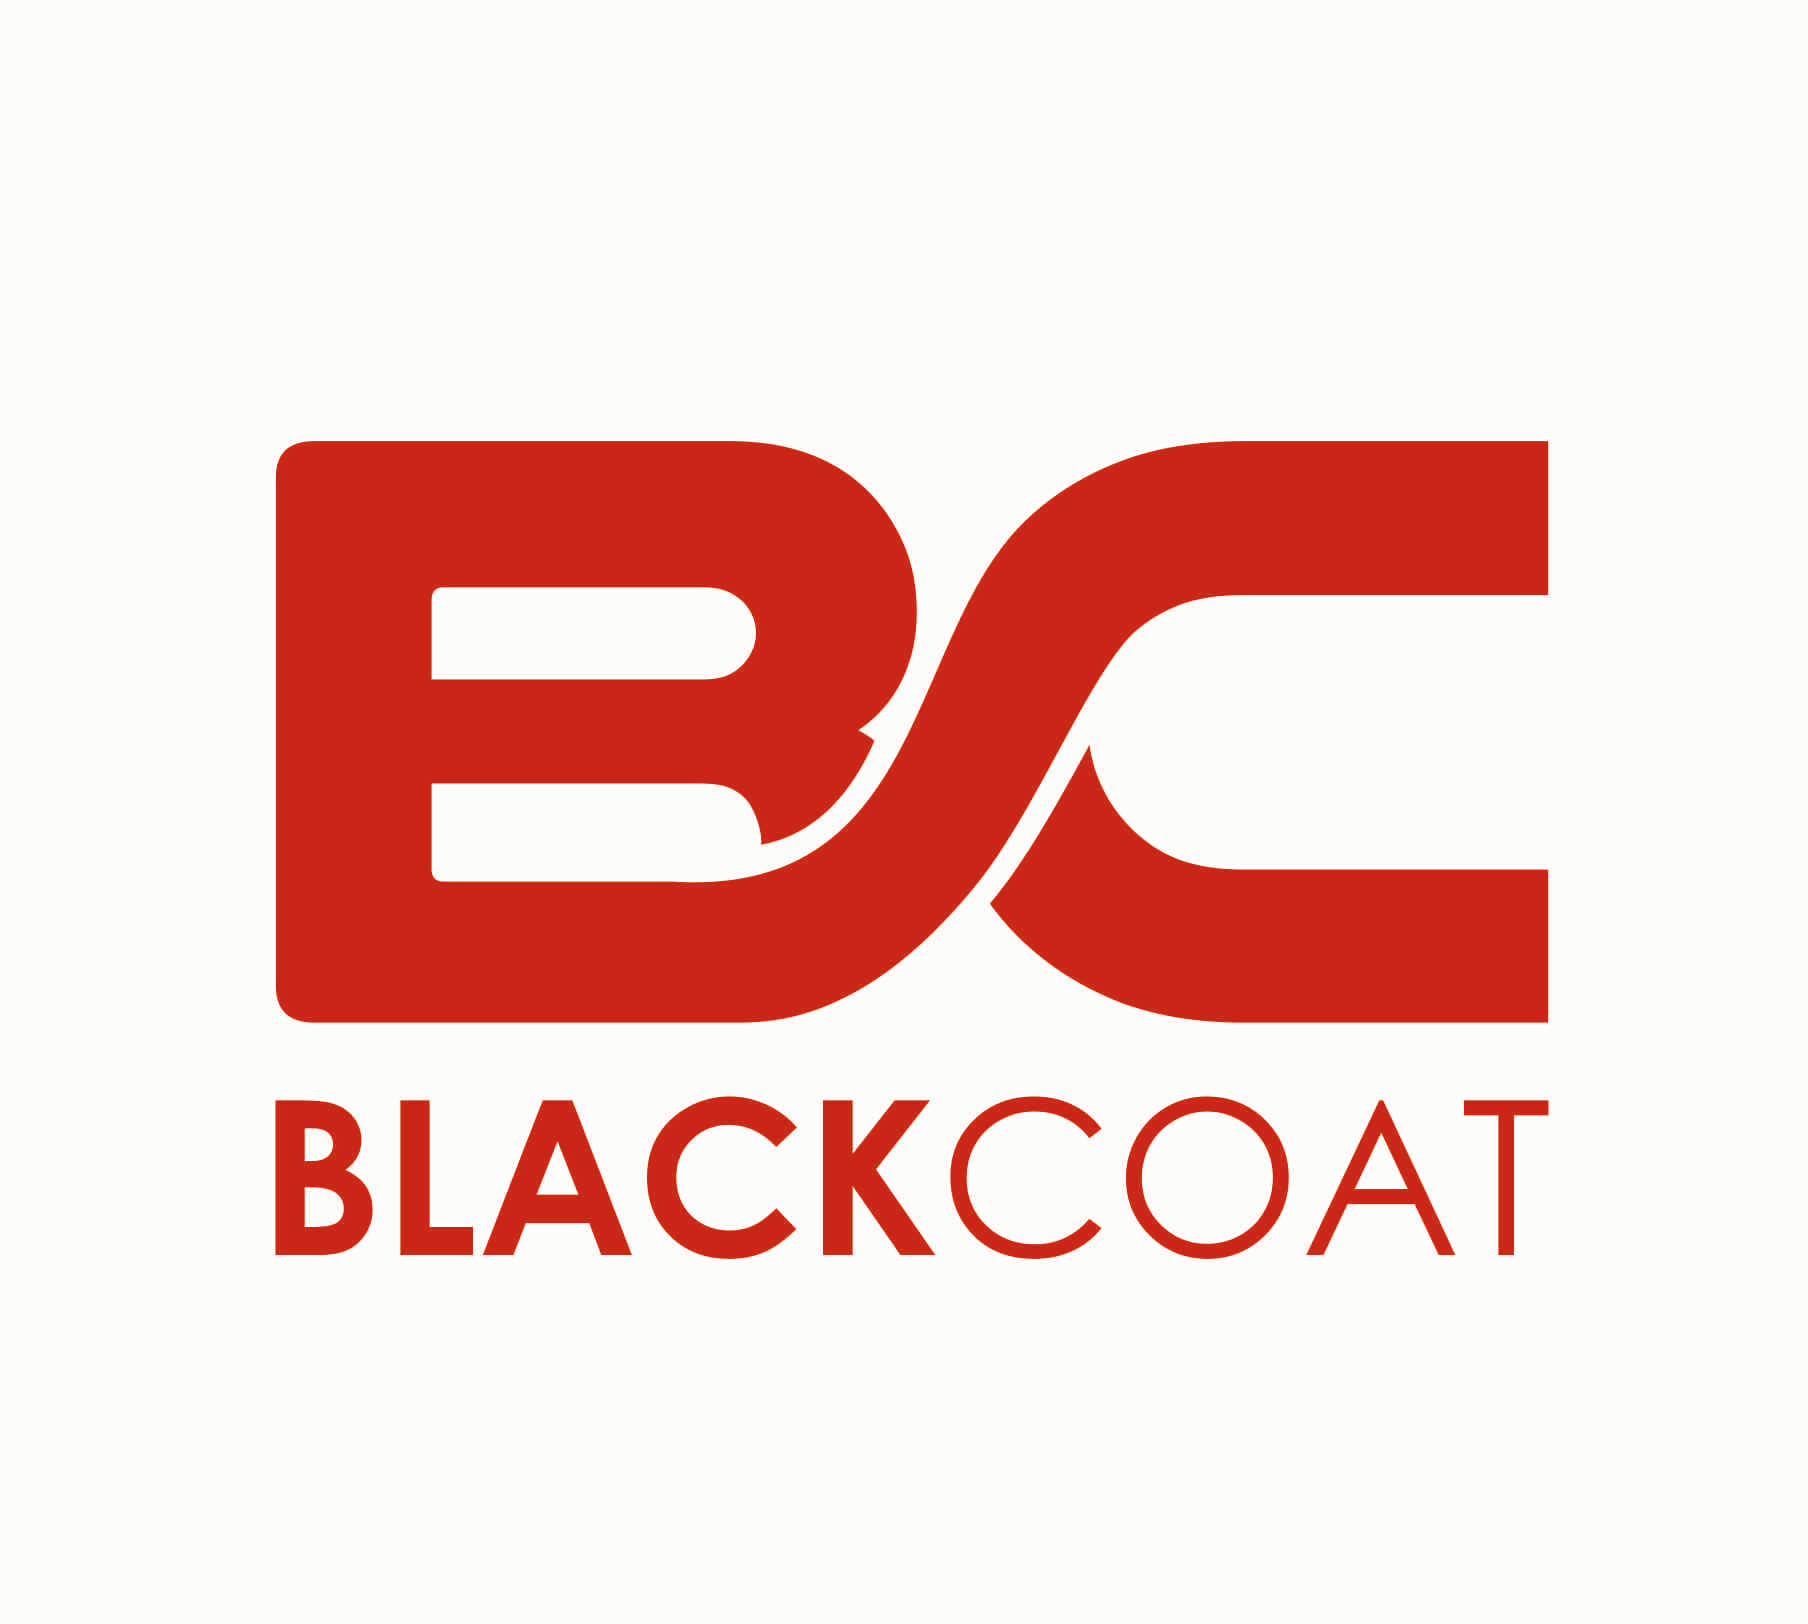 The Blackcoat